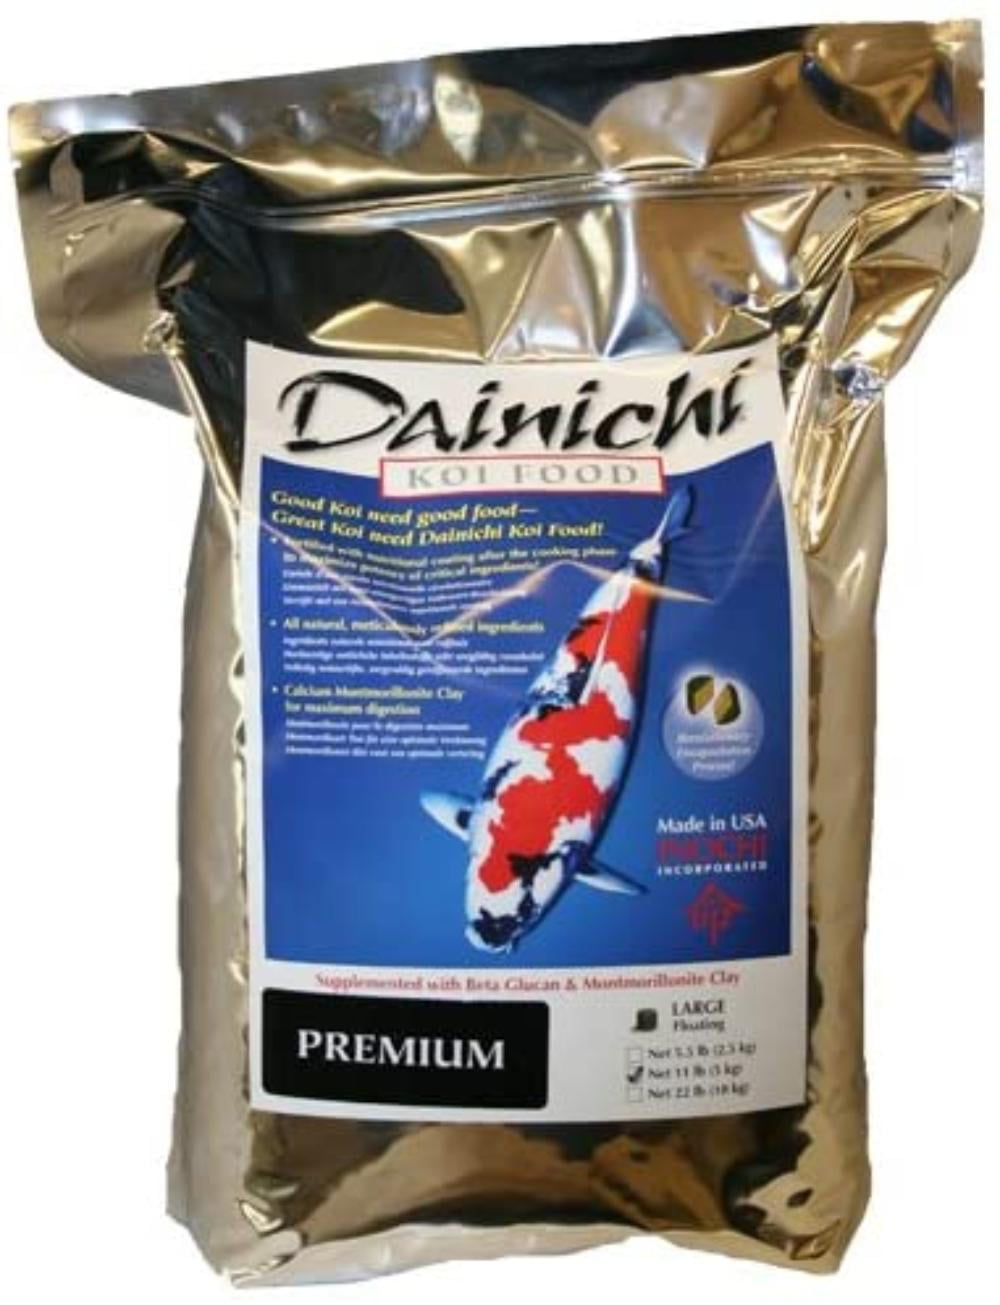 Dainichi Growth Plus Koi Fish Food 5.5 lbs Large Pellet 